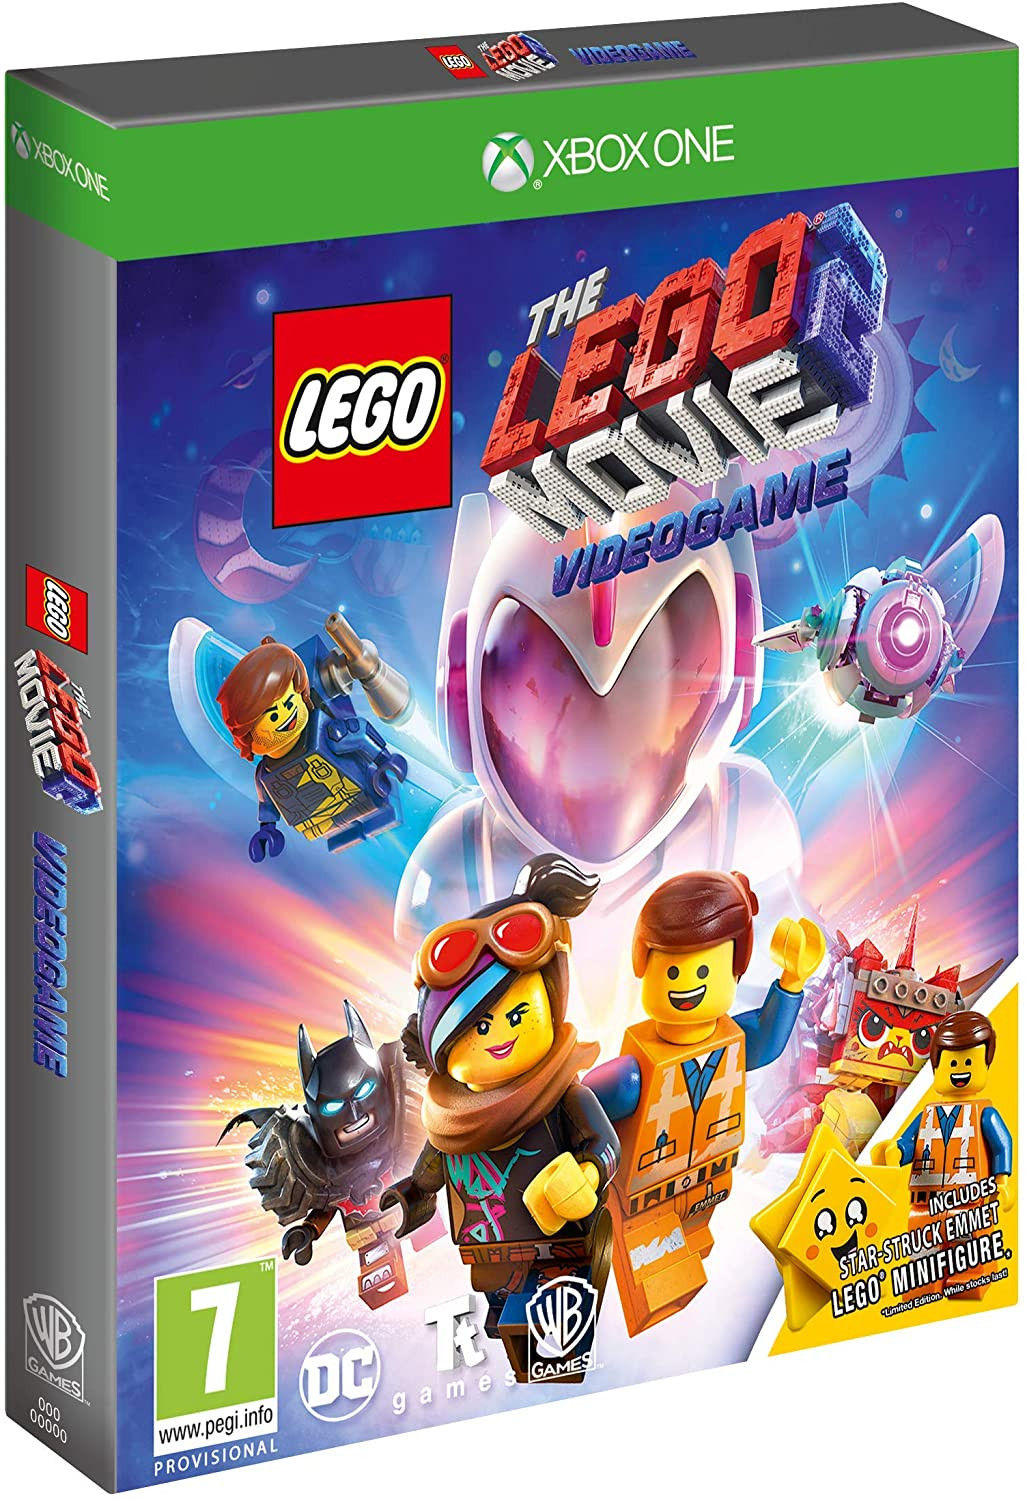 LEGO The Movie 2 Videogame (Mini Figure Edition) Xbox One